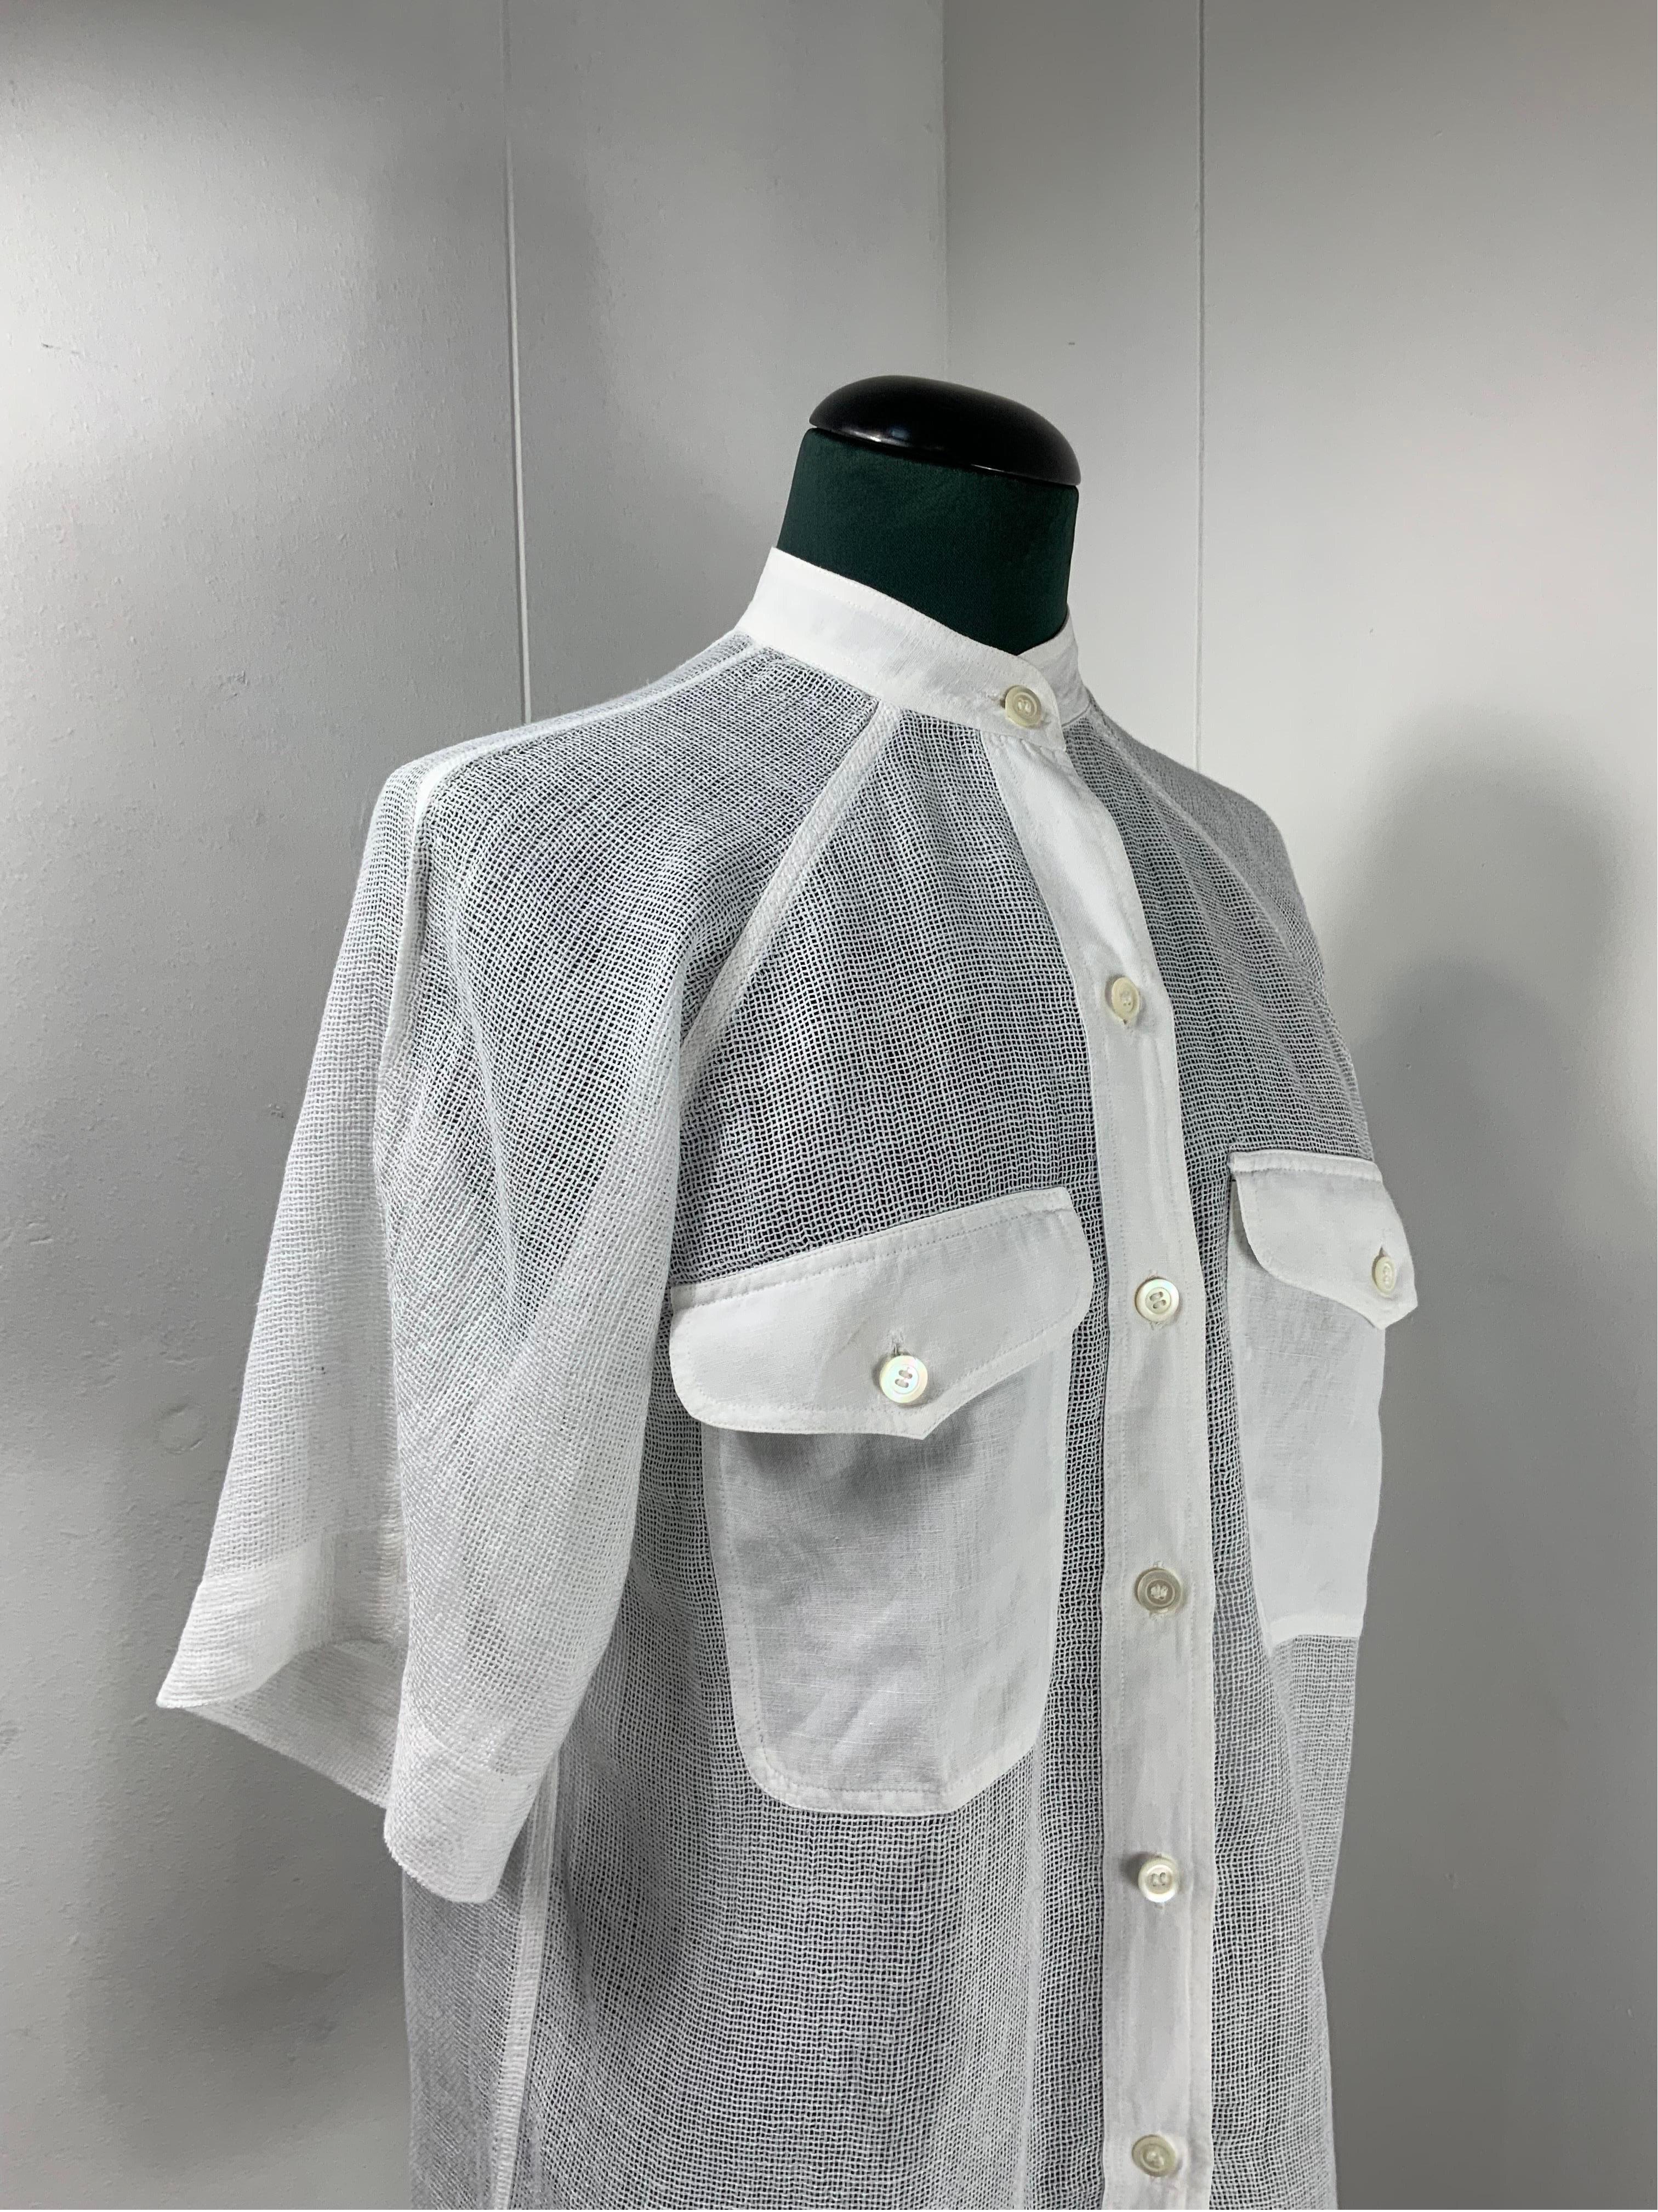 Yves Saint Laurent Vintage Shirt 2